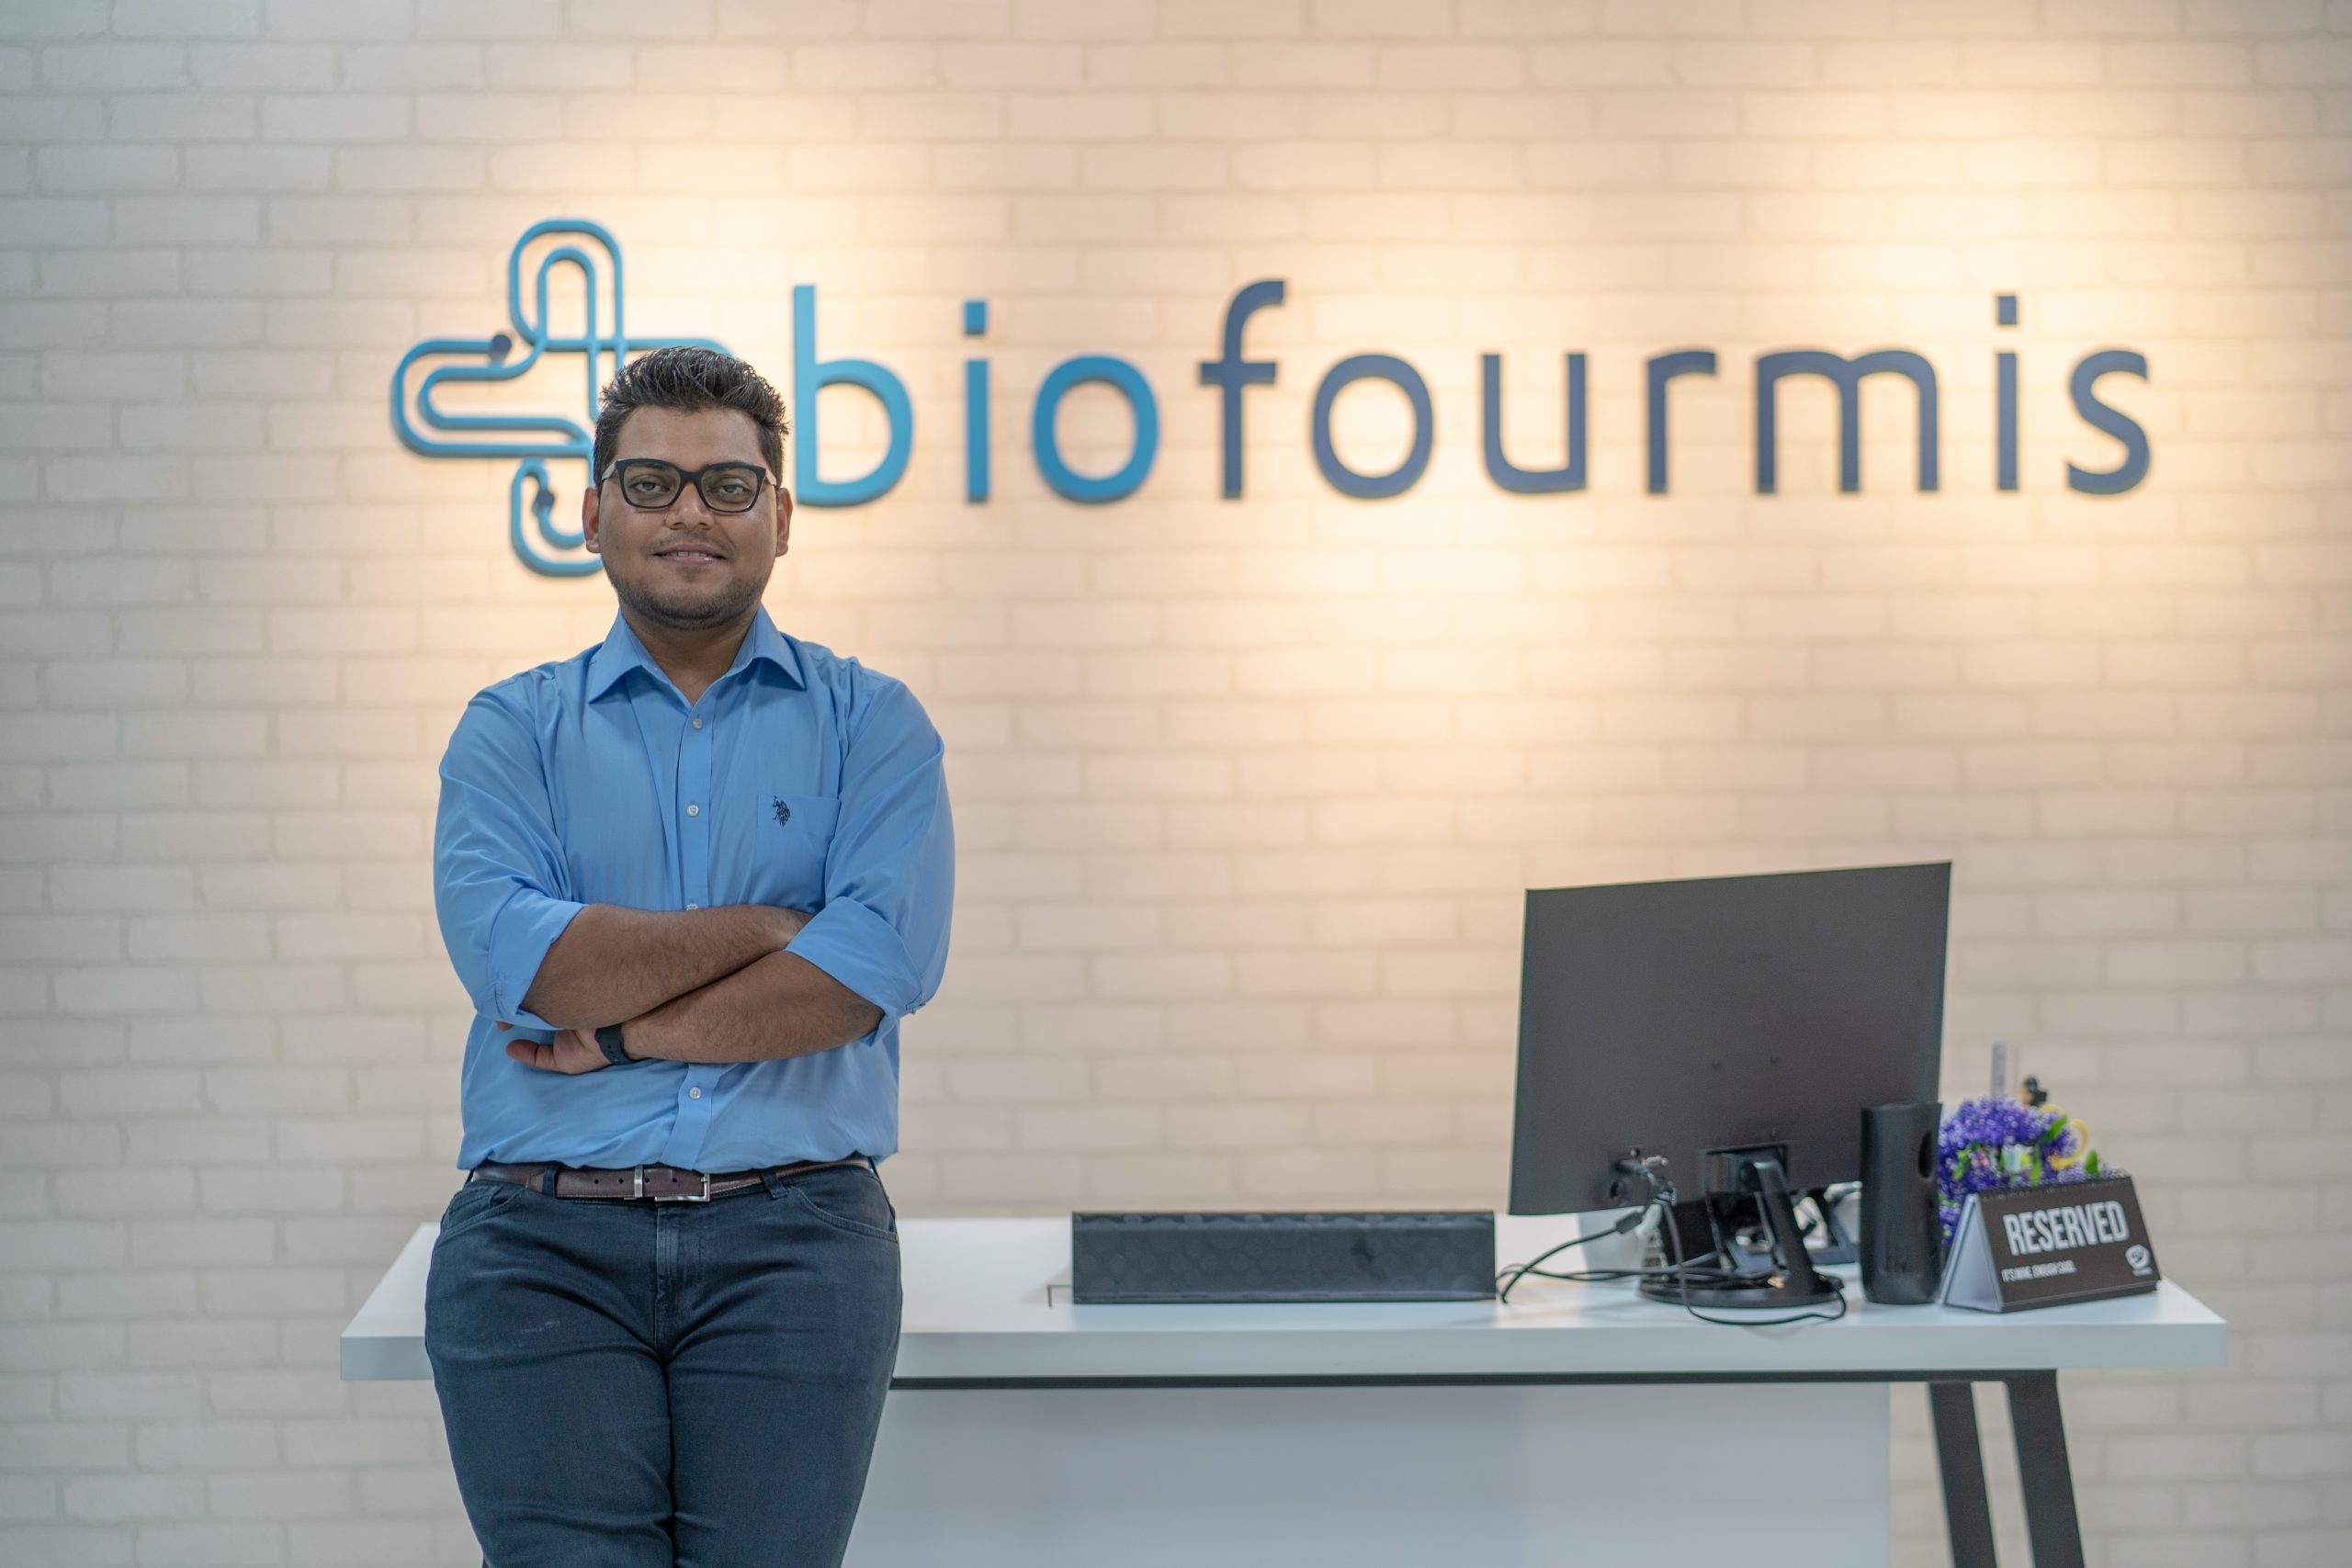 Biofourmis เข้าซื้อ Gaido Health รุกขยายตลาด Digital Therapeutic ครอบคลุมมะเร็งวิทยา